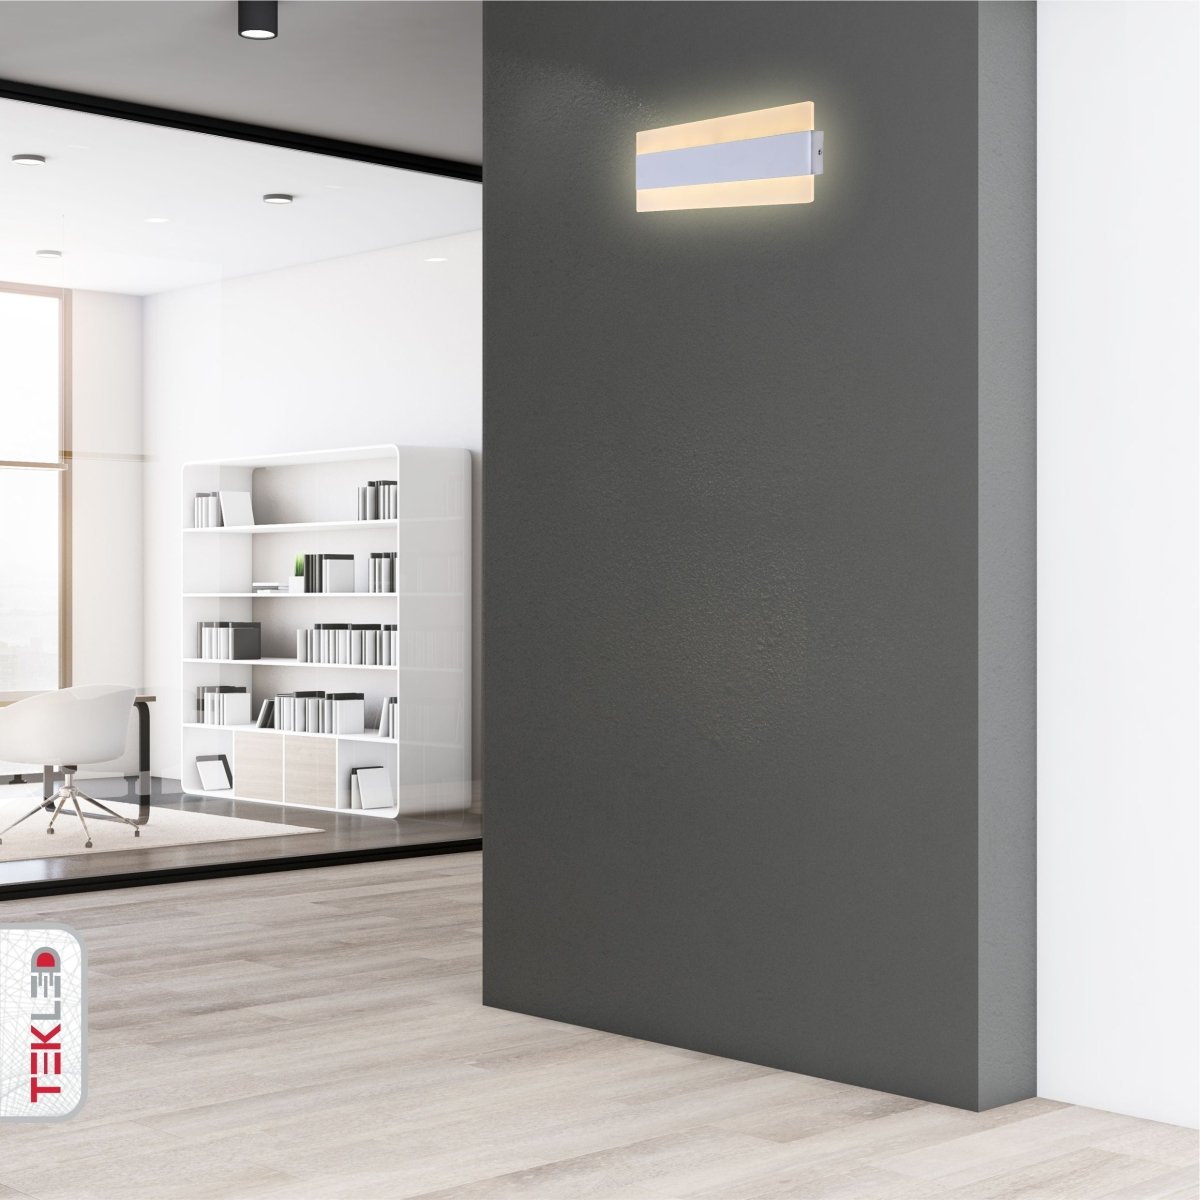 Indoor usage of LED White Metal Acrylic Wall Light 12W Warm White 3000K | TEKLED 151-19542